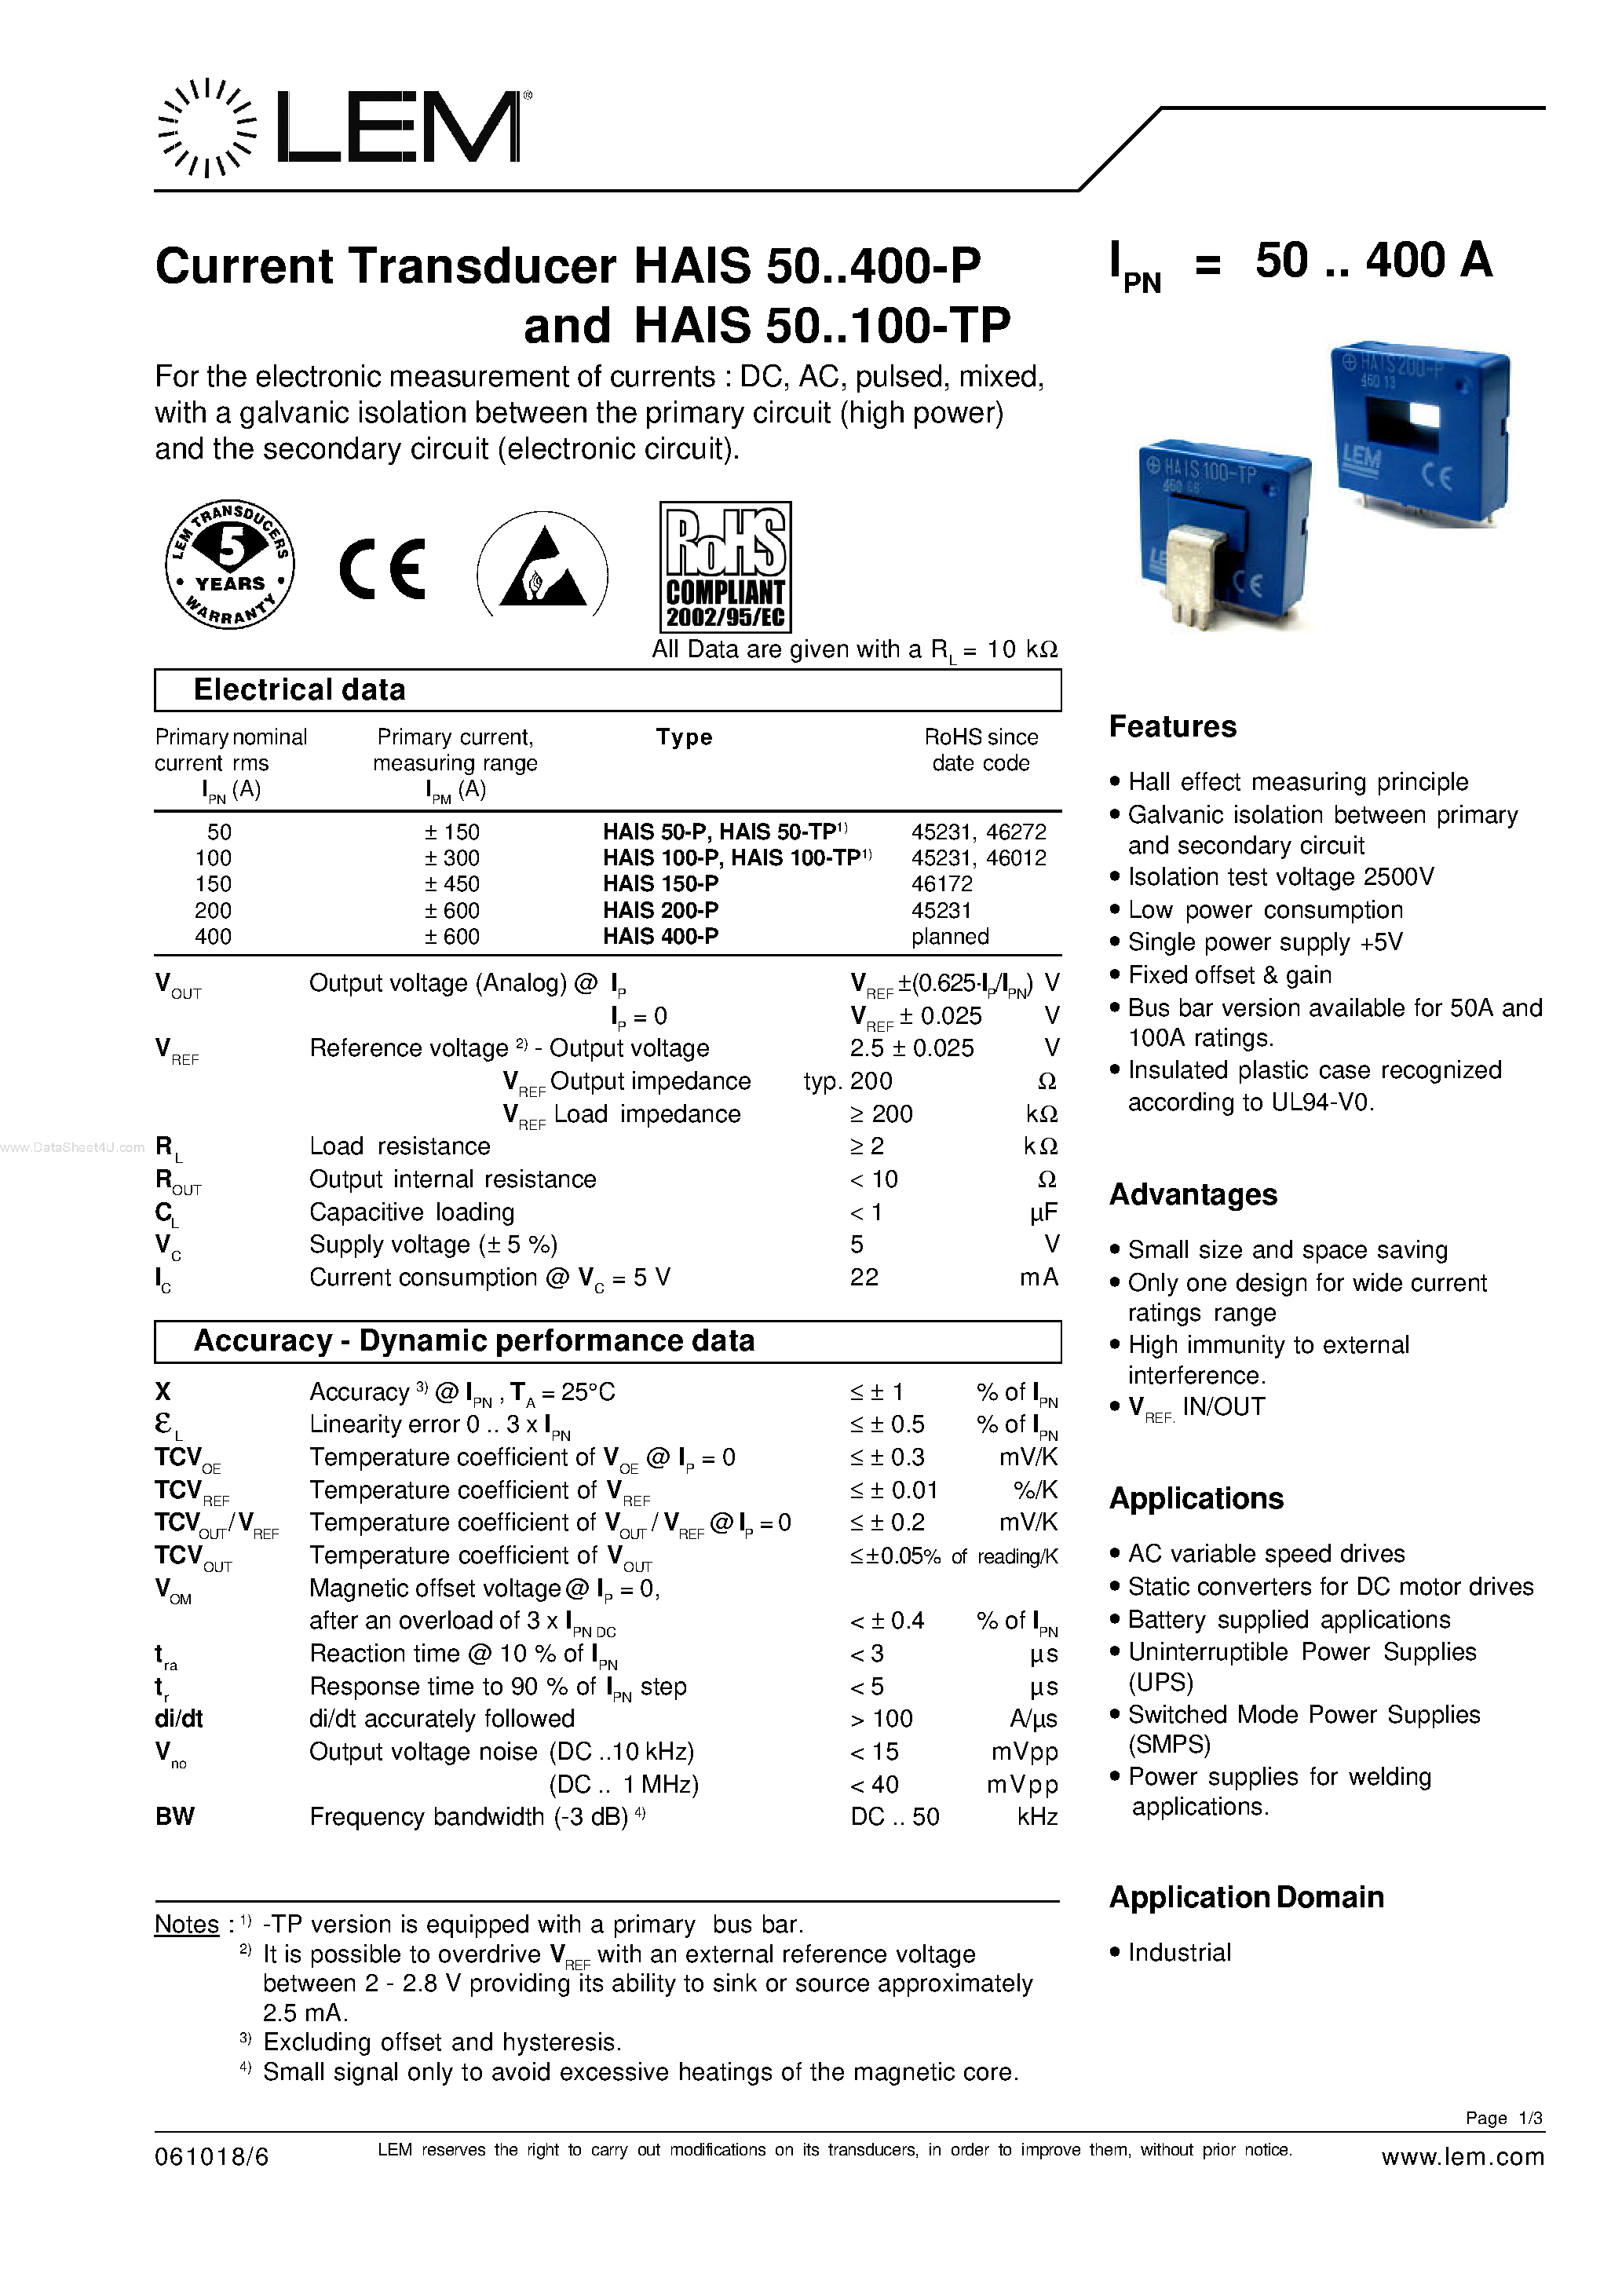 Datasheet HAIS100-P - (HAISxxx-P) Current Transducer page 1